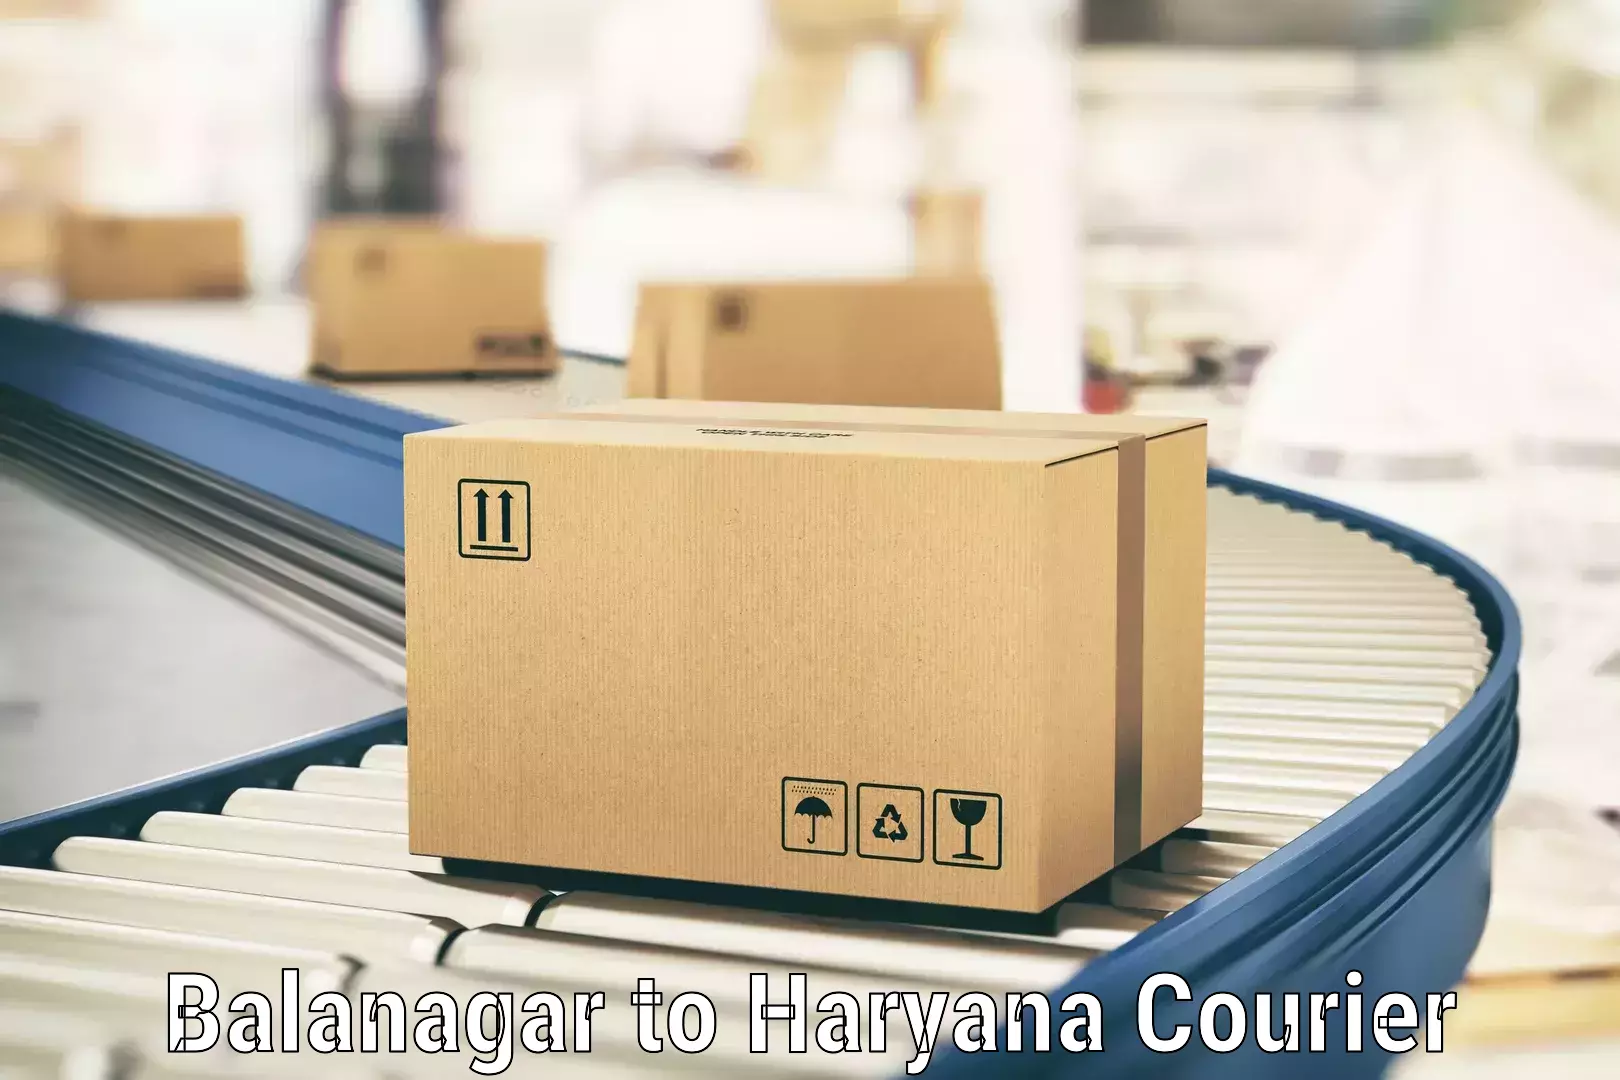 Round-the-clock parcel delivery Balanagar to Assandh